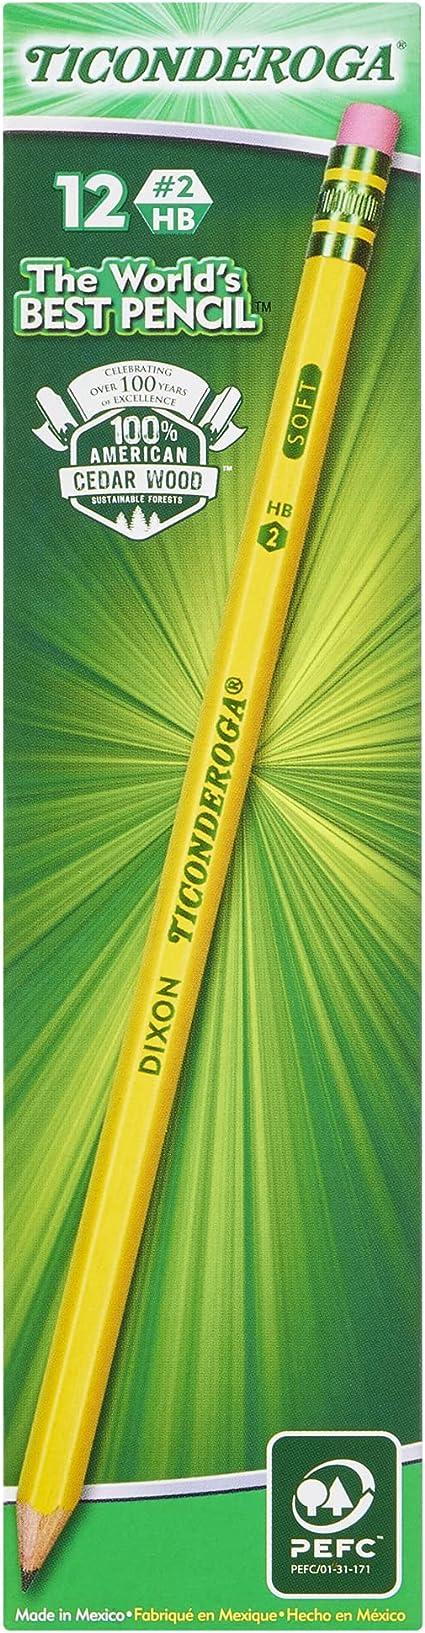 ticonderoga wood cased pencils pre-sharpened 2 hb soft yellow  ticonderoga b000jeaap2